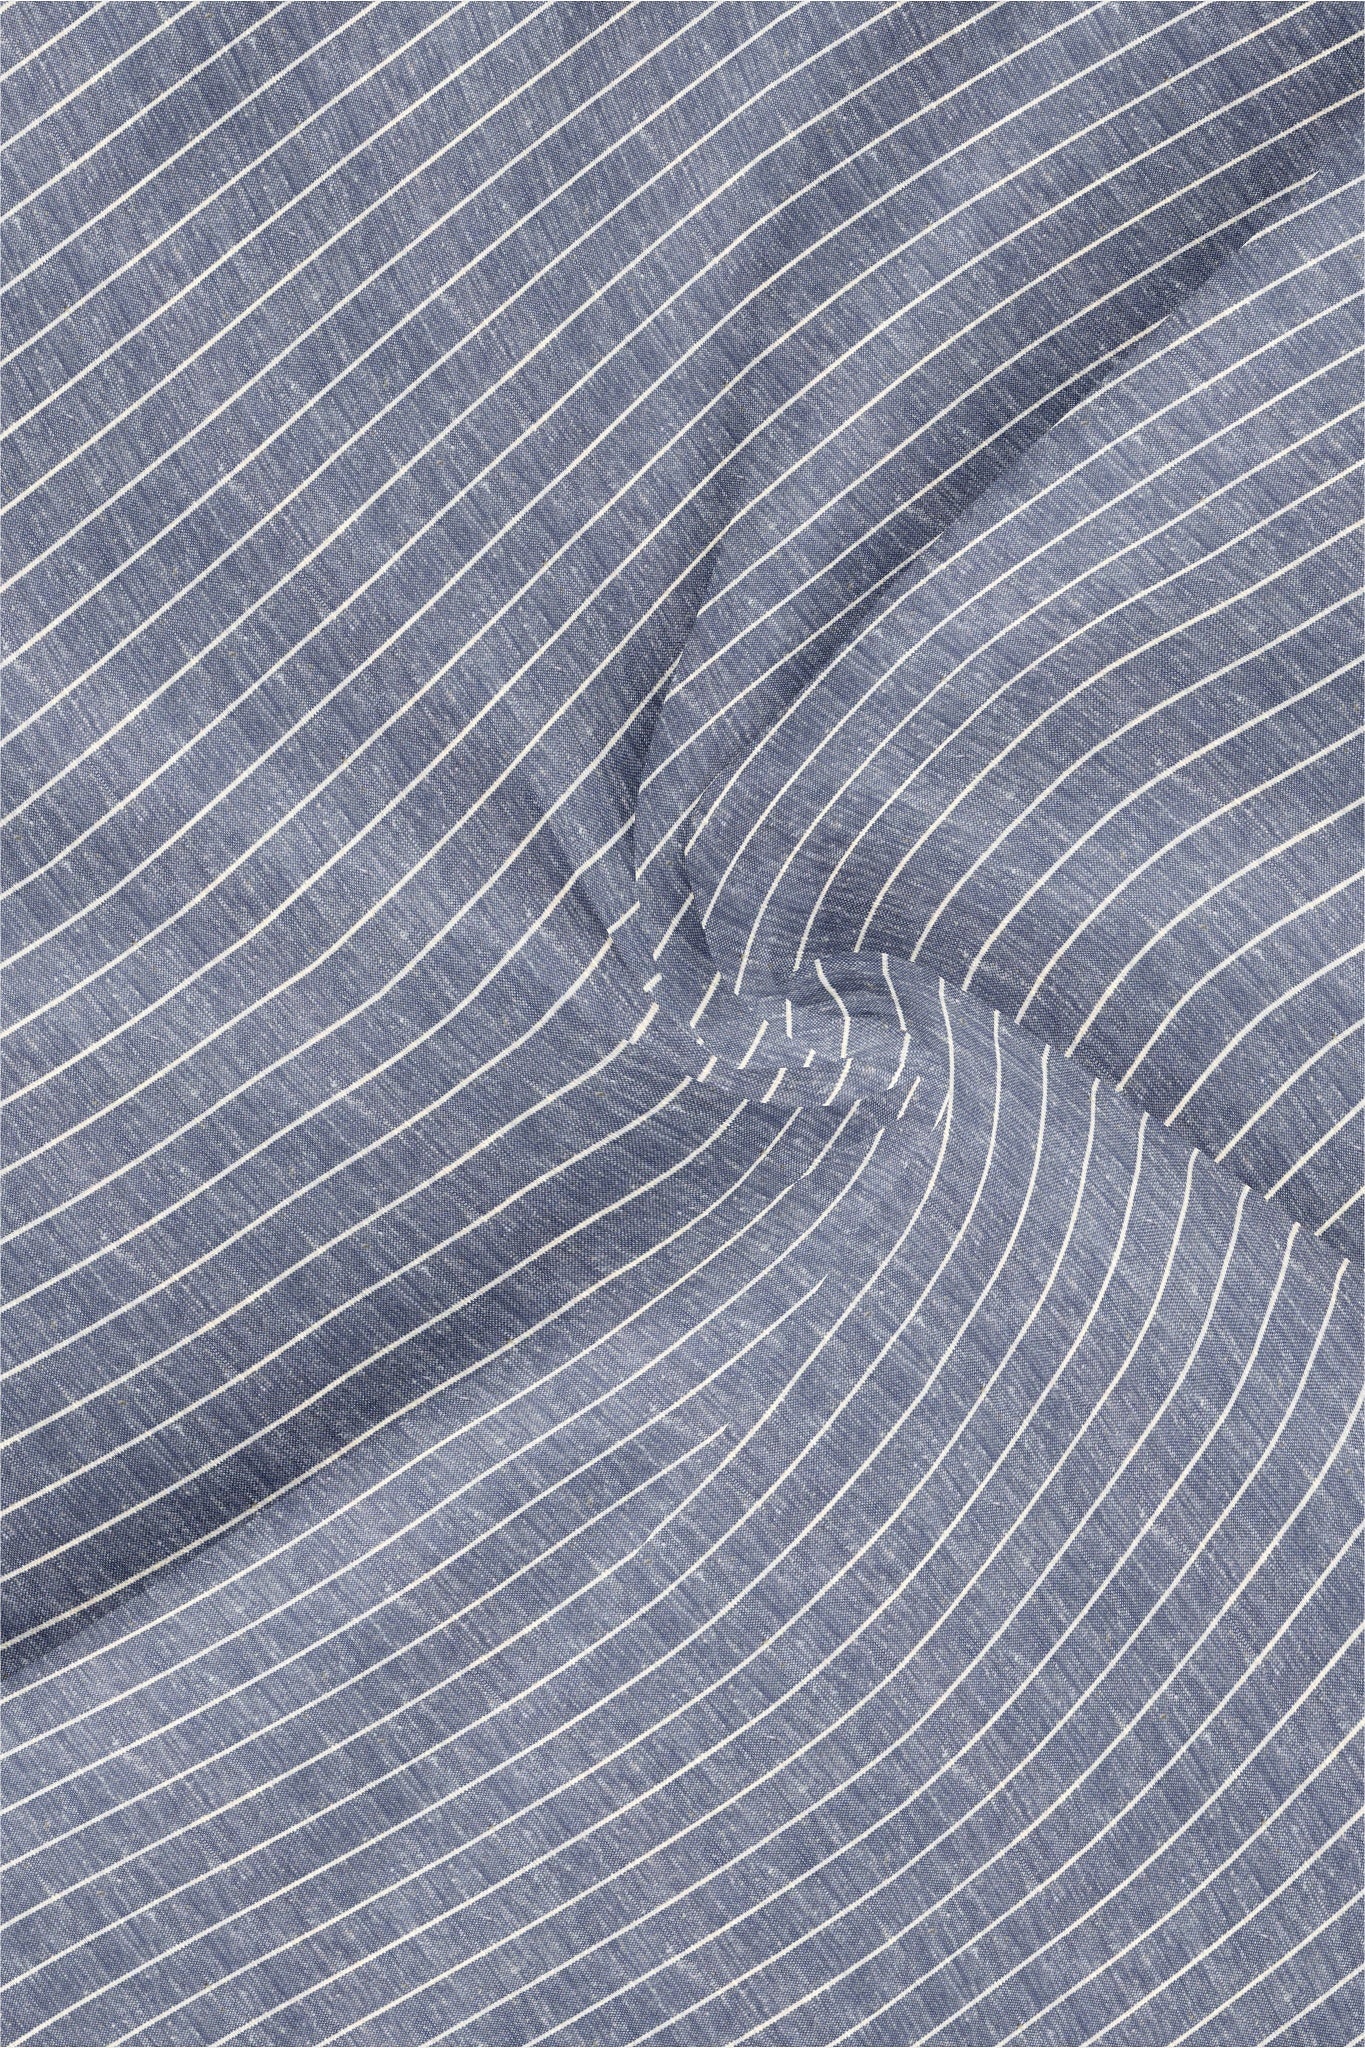 Denim Blue and White Pinstripes Cotton Linen Shirt